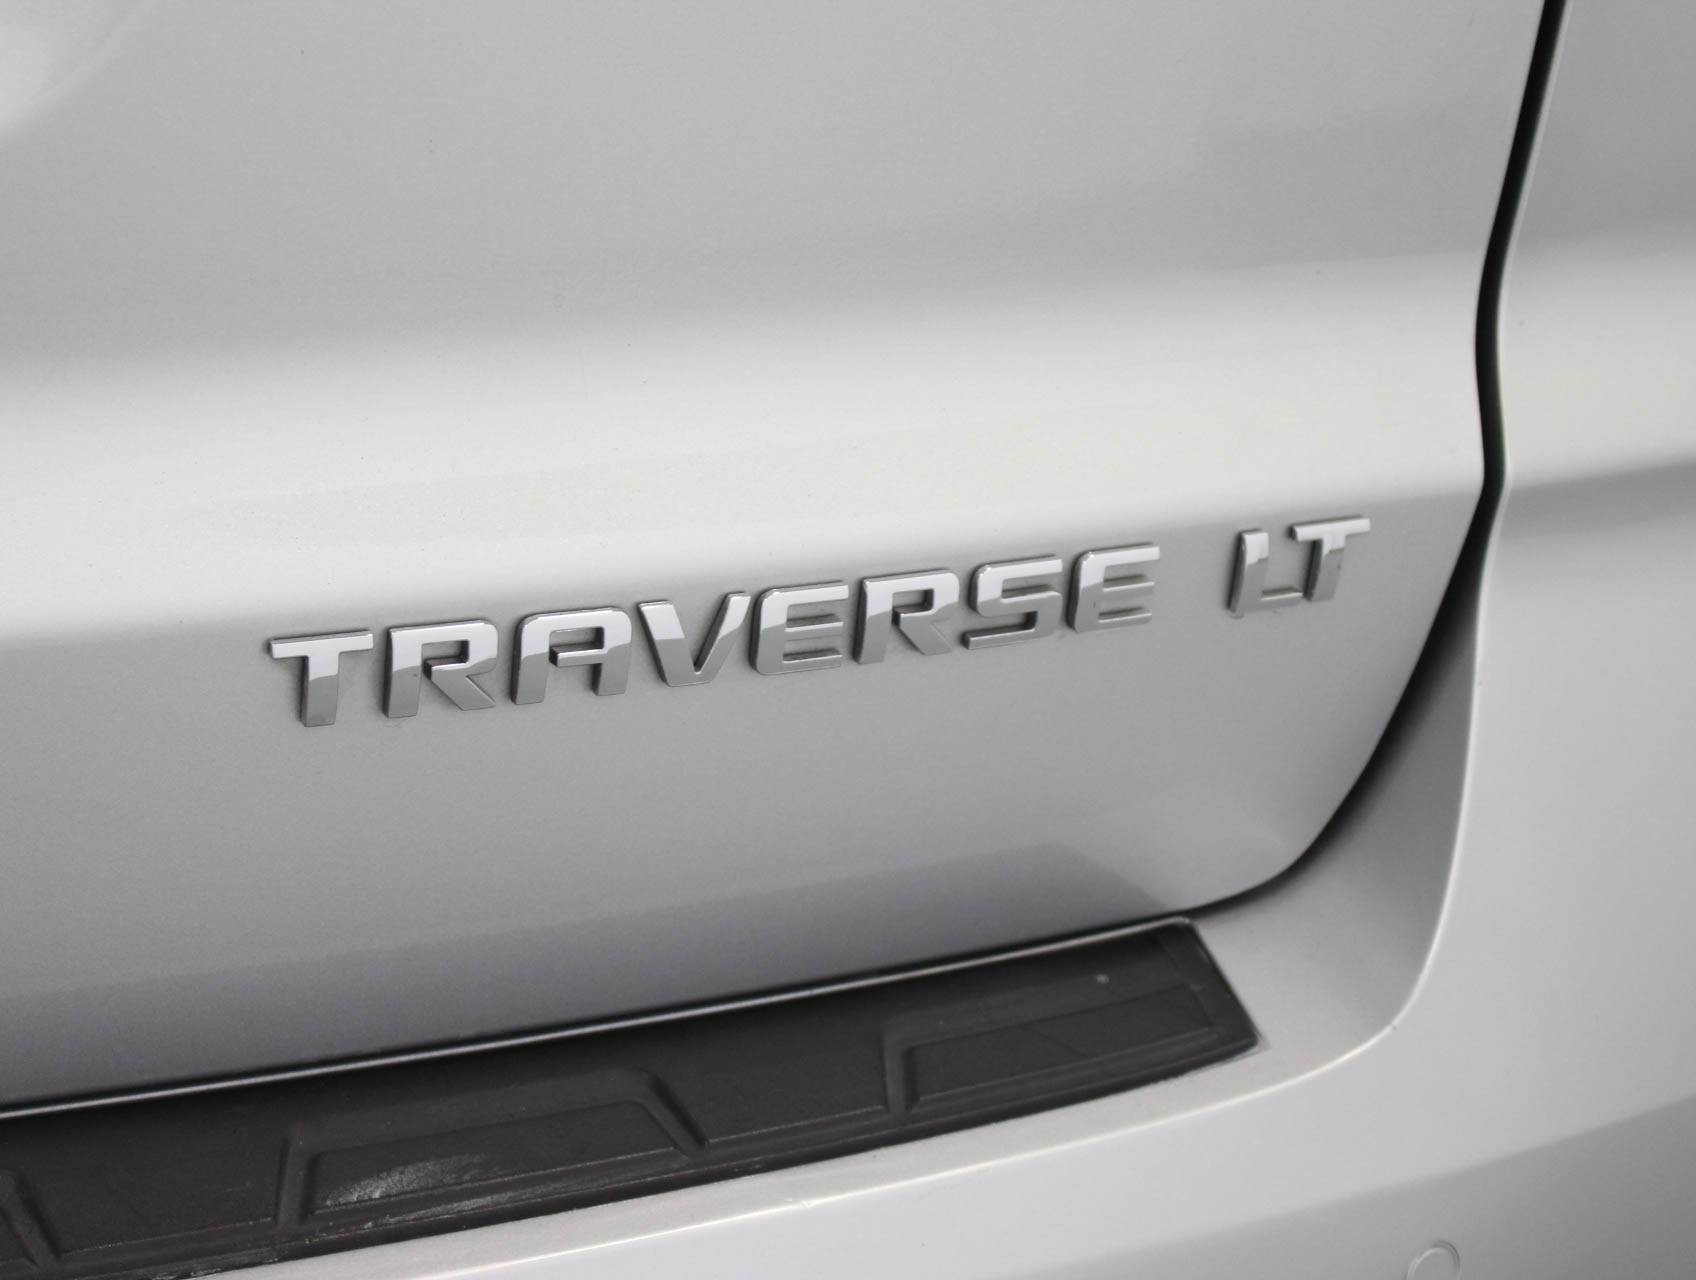 Florida Fine Cars - Used CHEVROLET TRAVERSE 2016 MARGATE 1LT